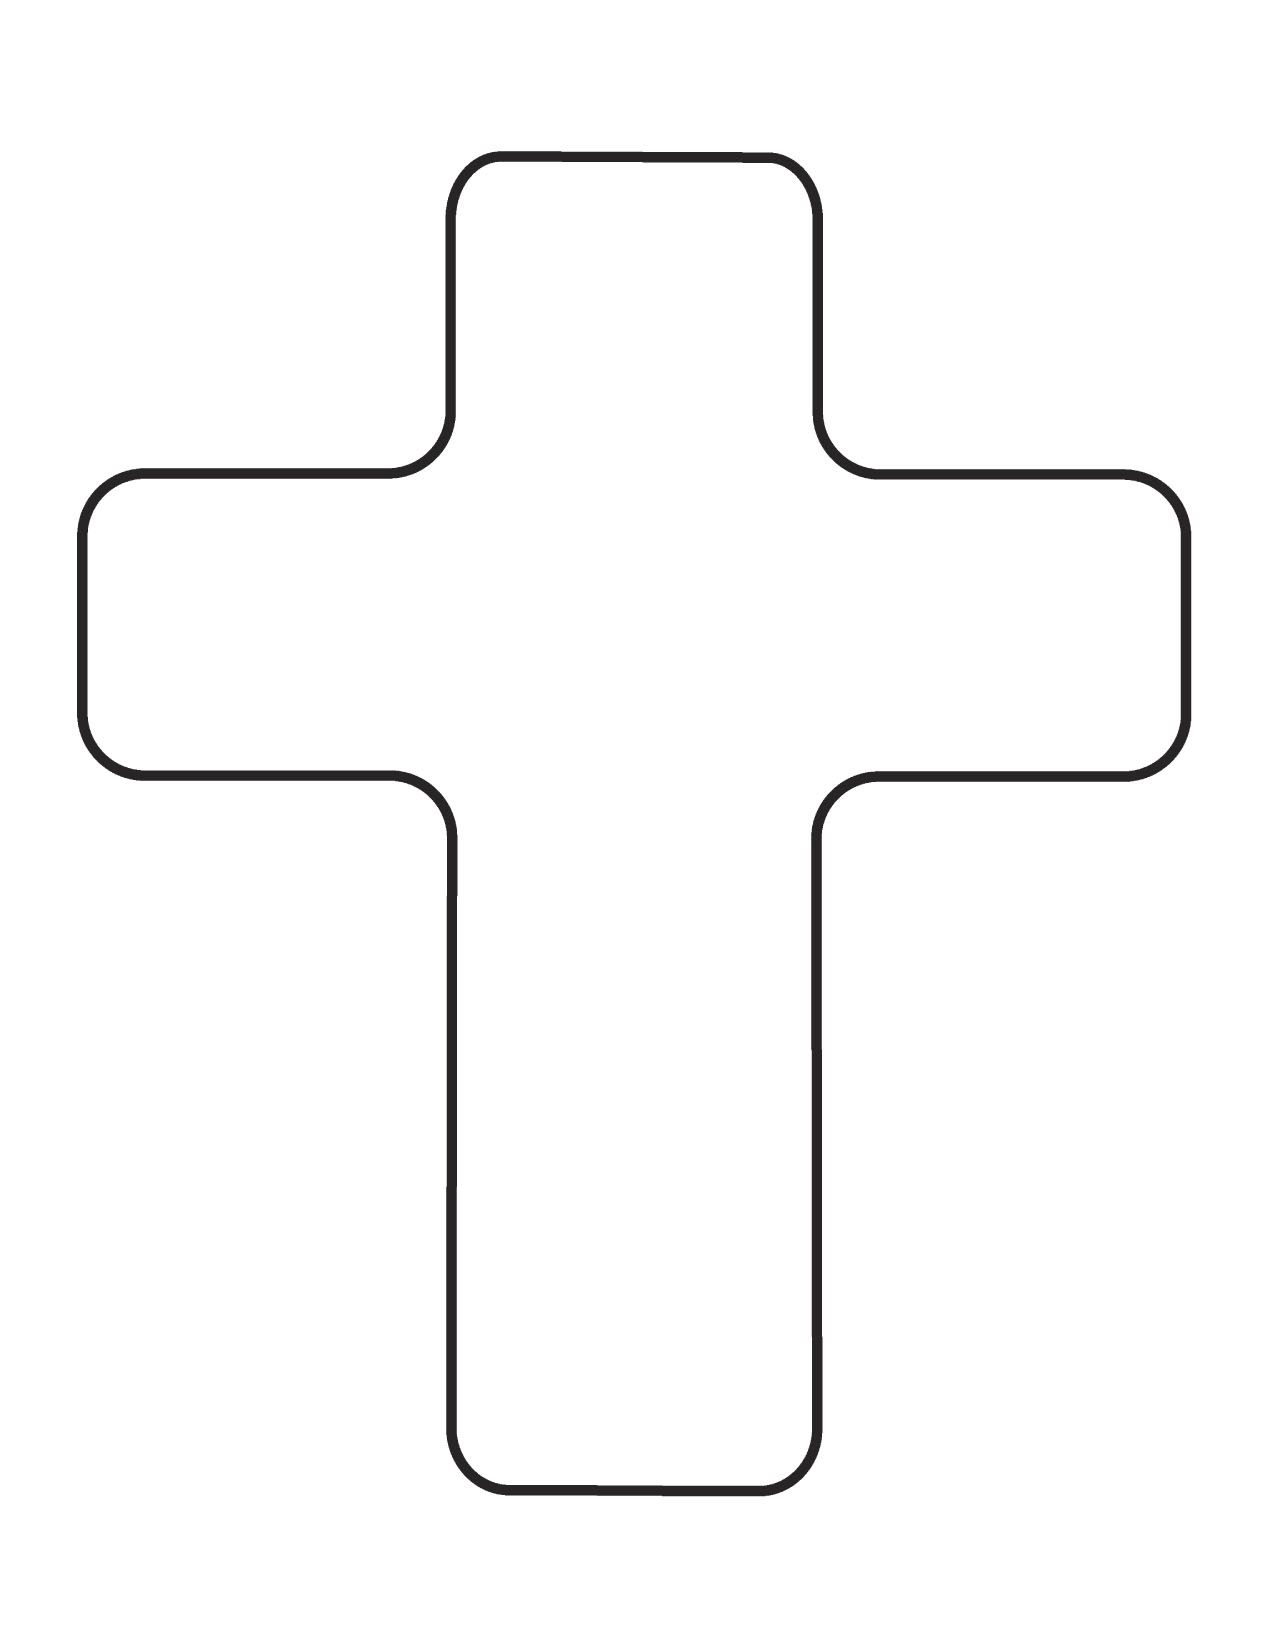 Black Christian Cross | Clipa - Free Clipart Of Crosses